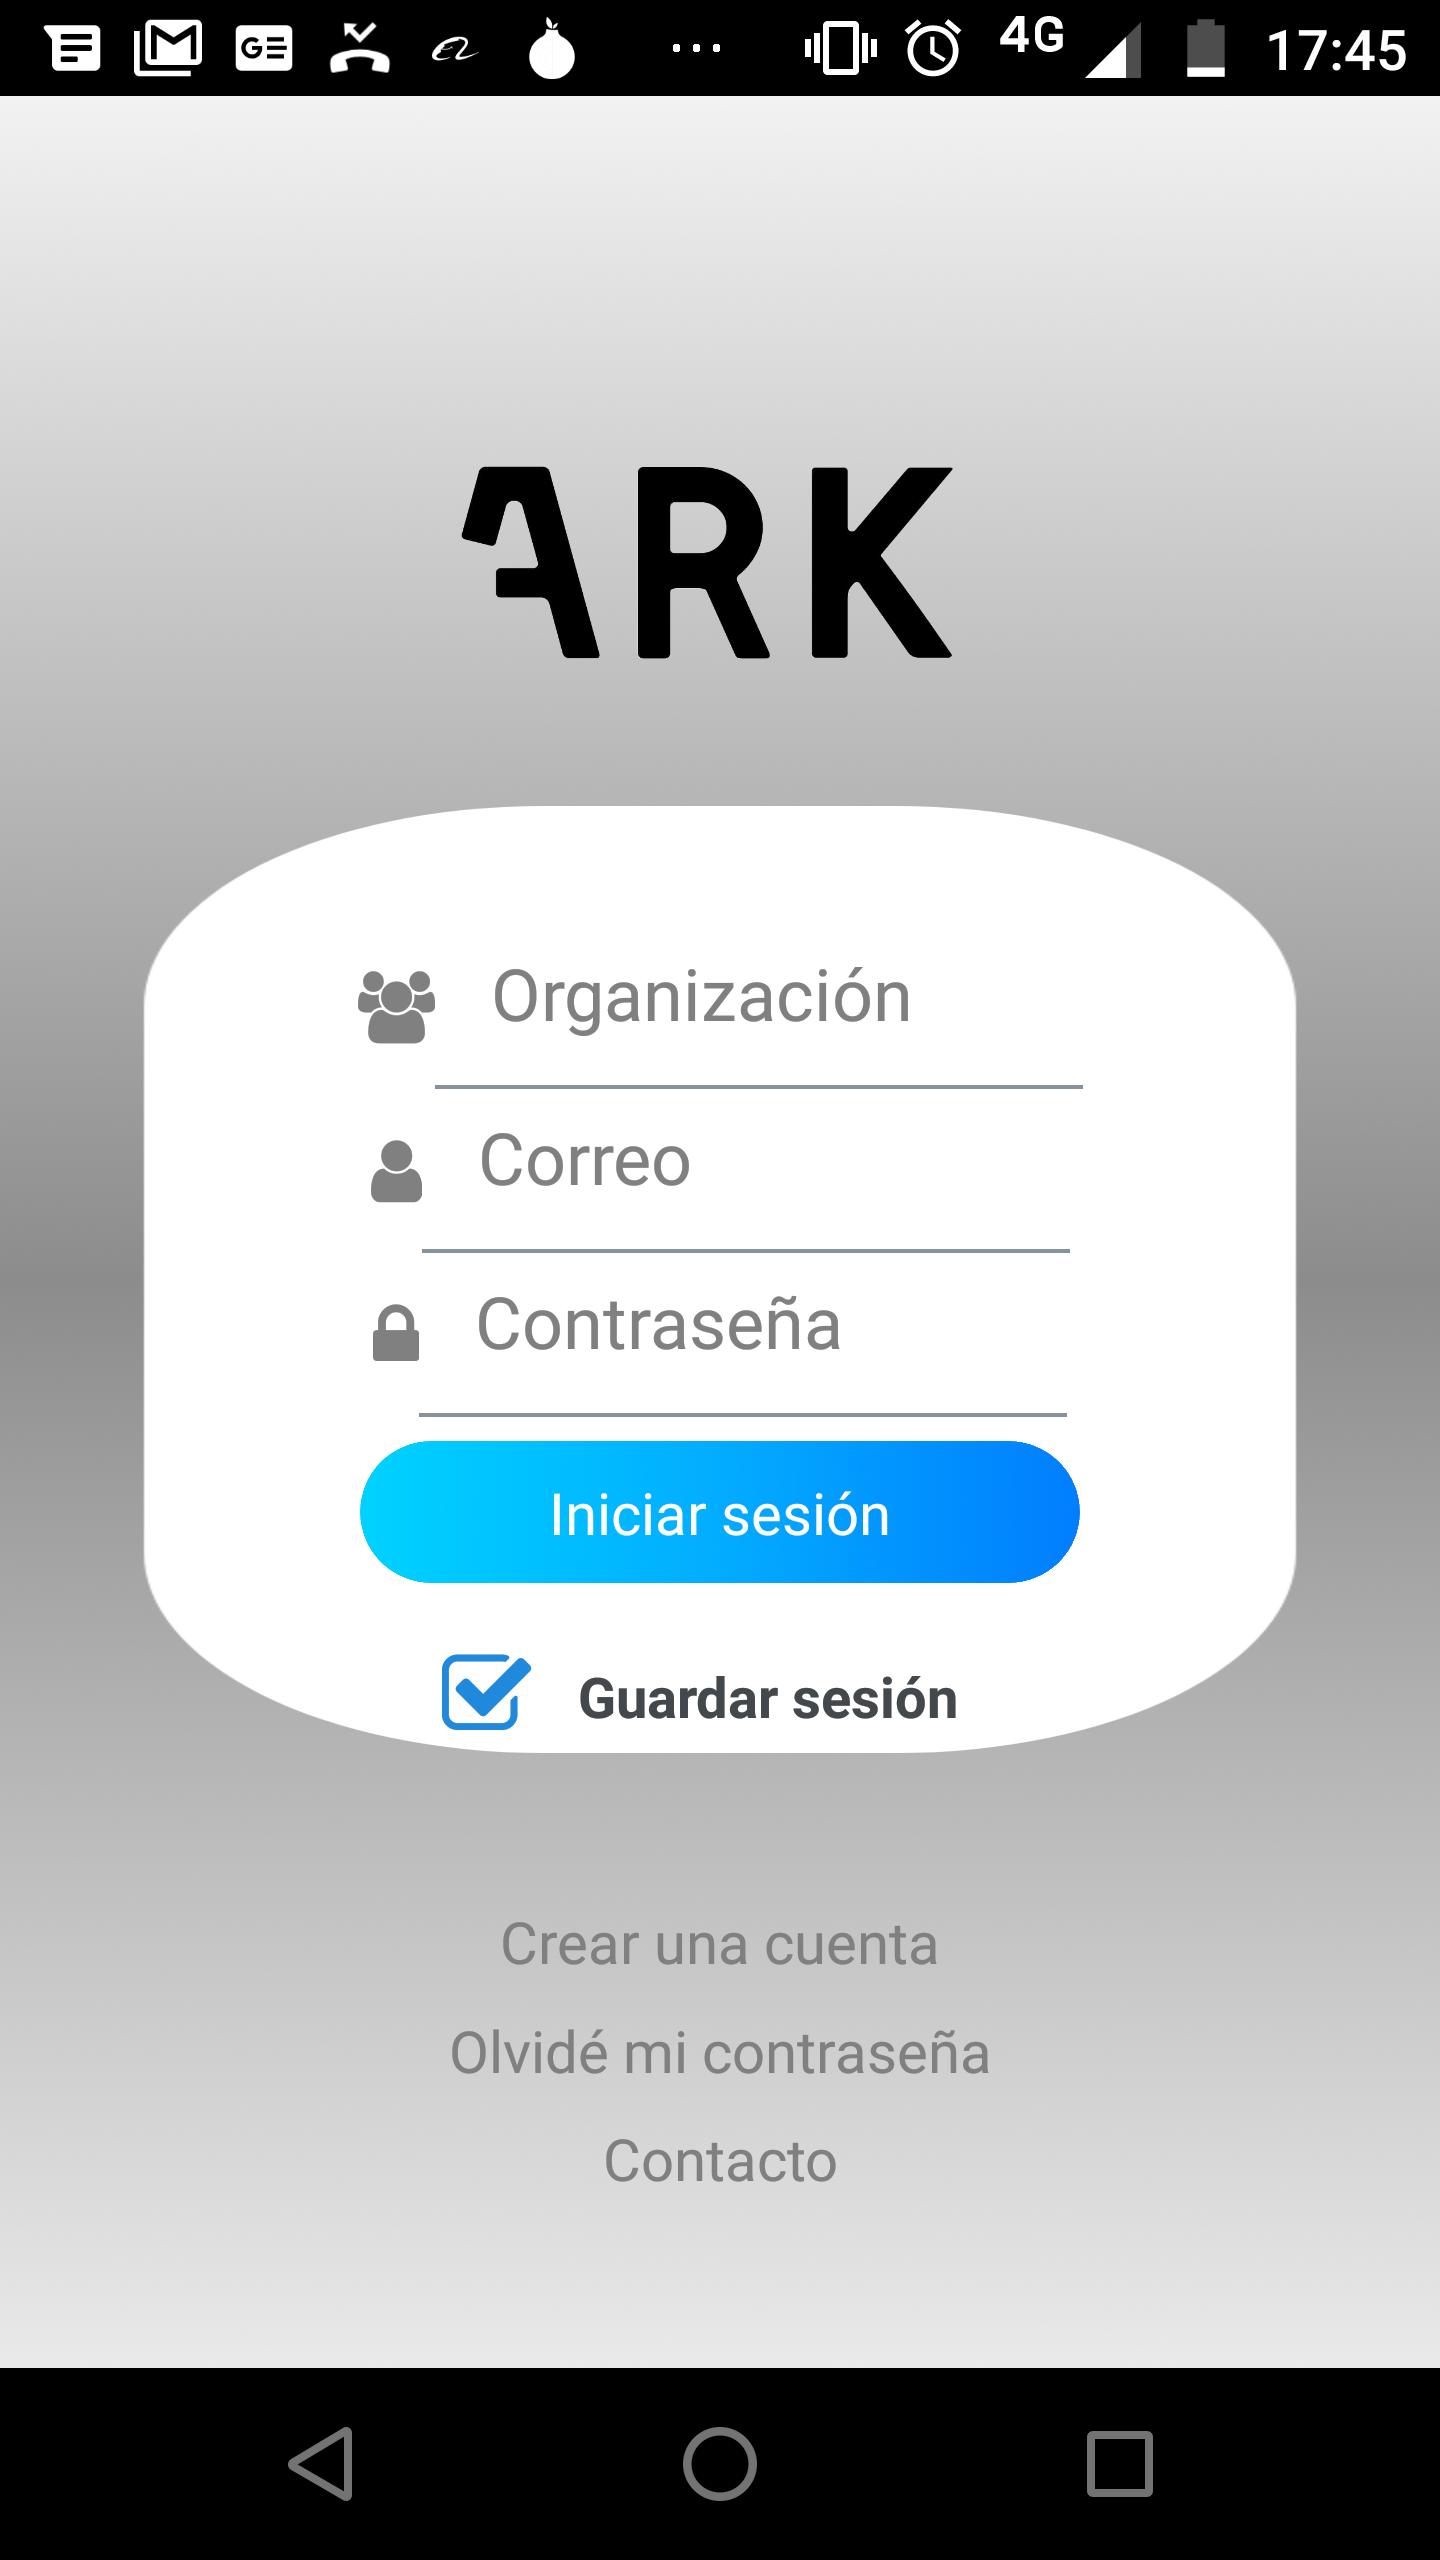 App ark. АРК приложения для андроид.